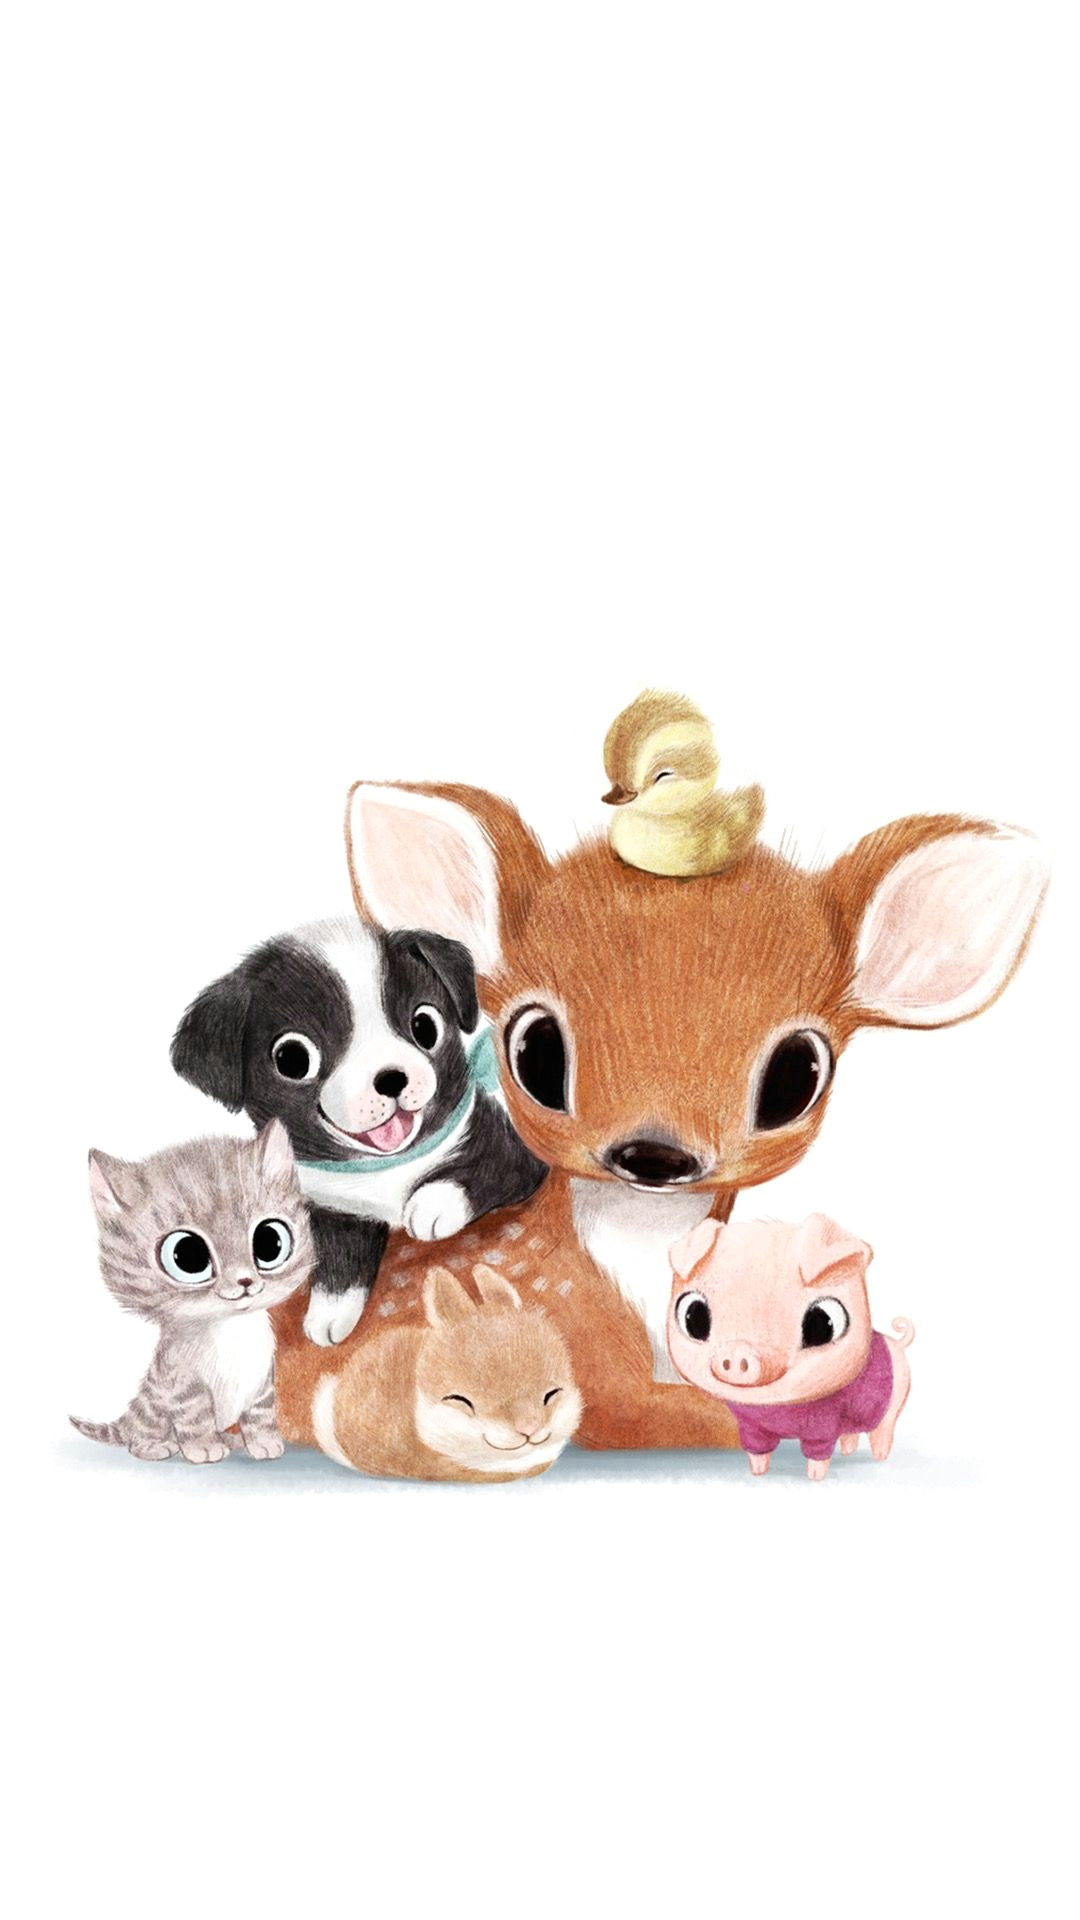 Cute Stuffed Animal Drawings Pin On Sally S Wallpapers